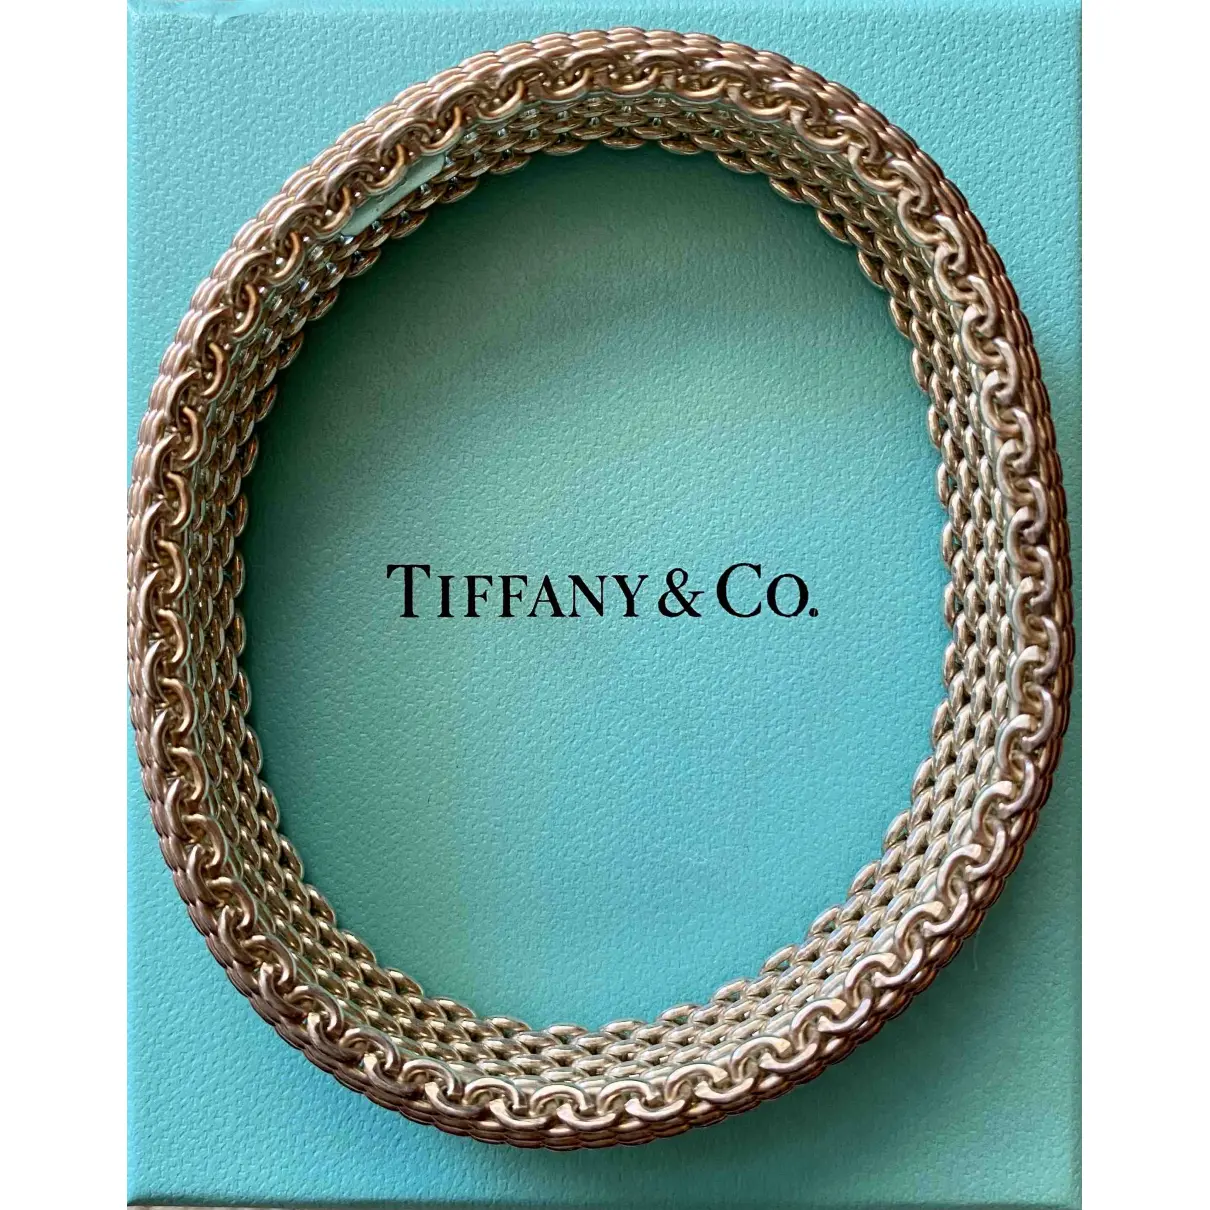 Buy Tiffany & Co Tiffany Somerset silver bracelet online